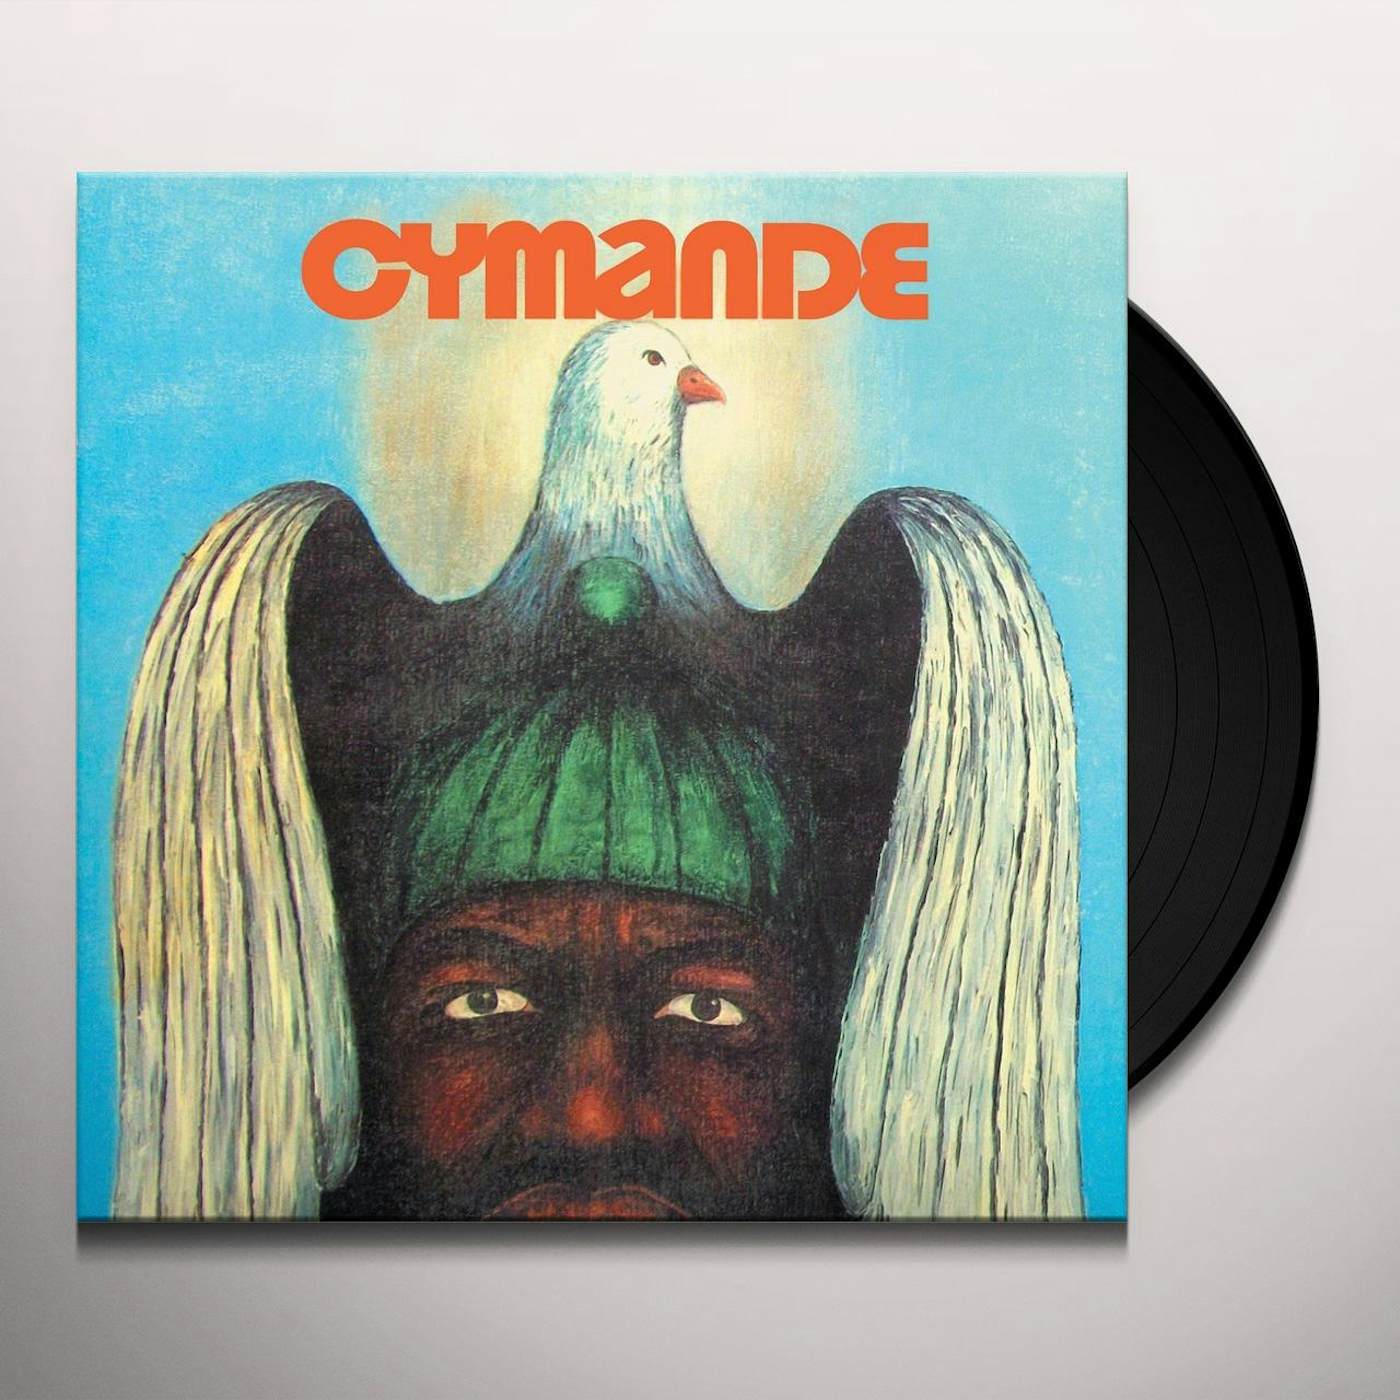 Cymande Vinyl Record